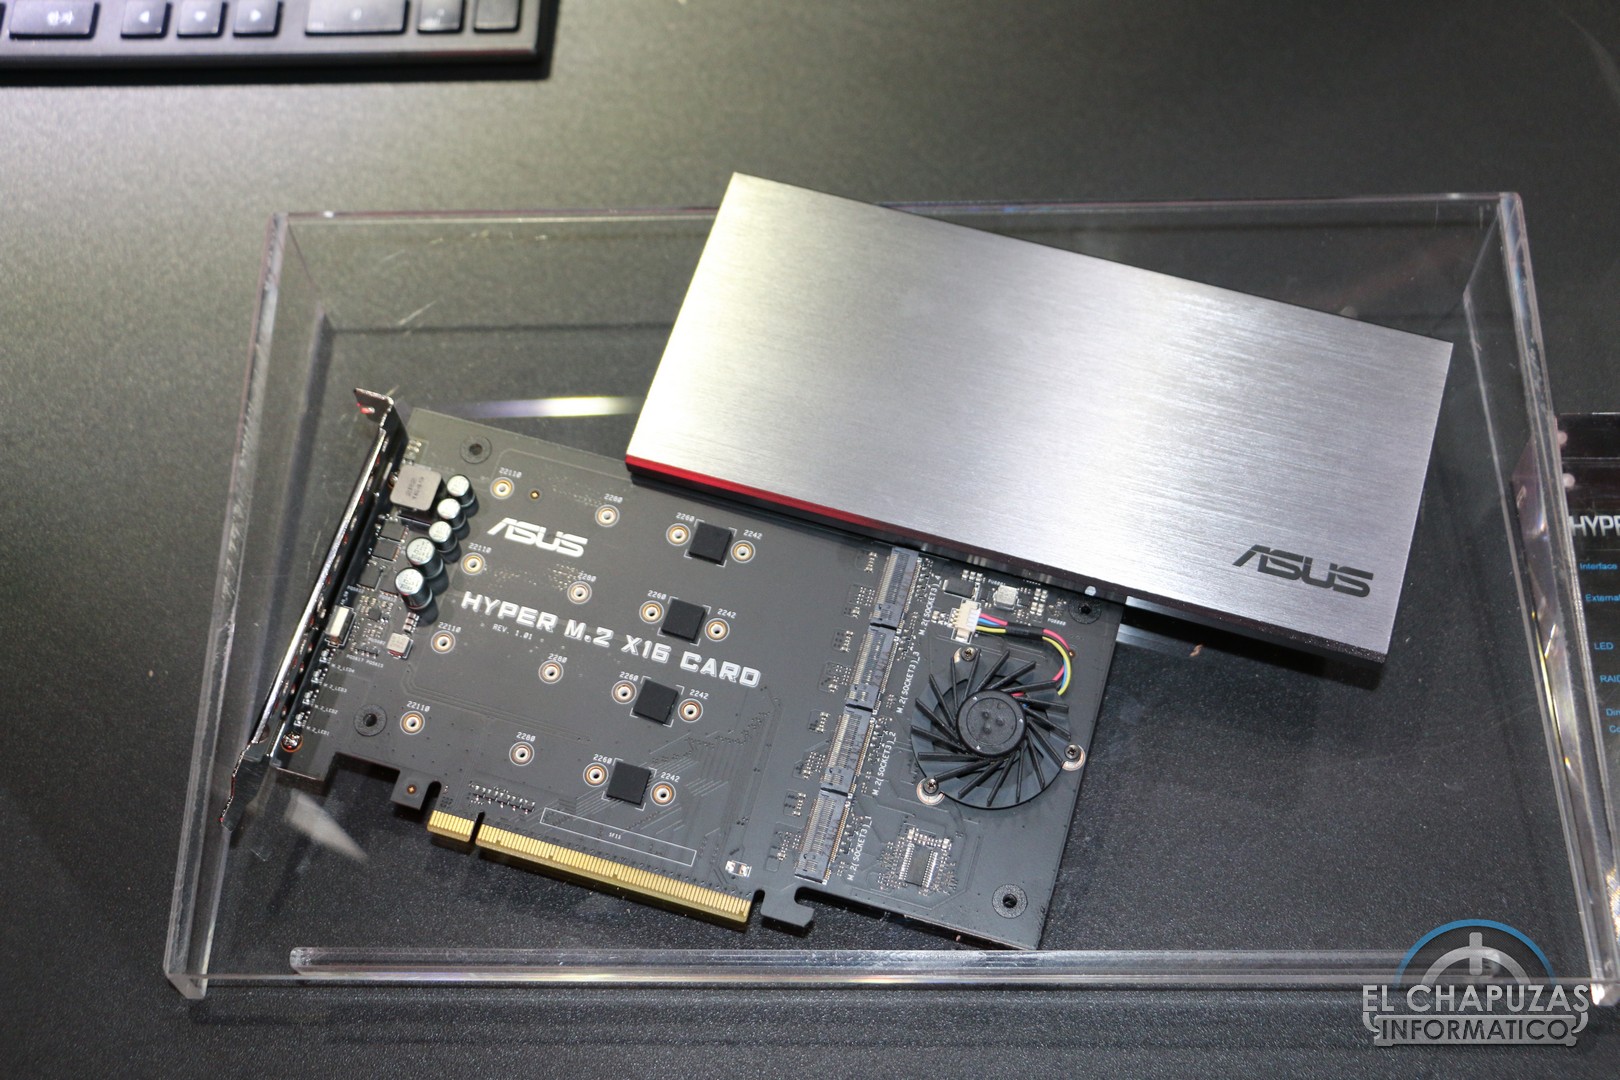 Asus Hyper M.2 x16 Card 740x493 0